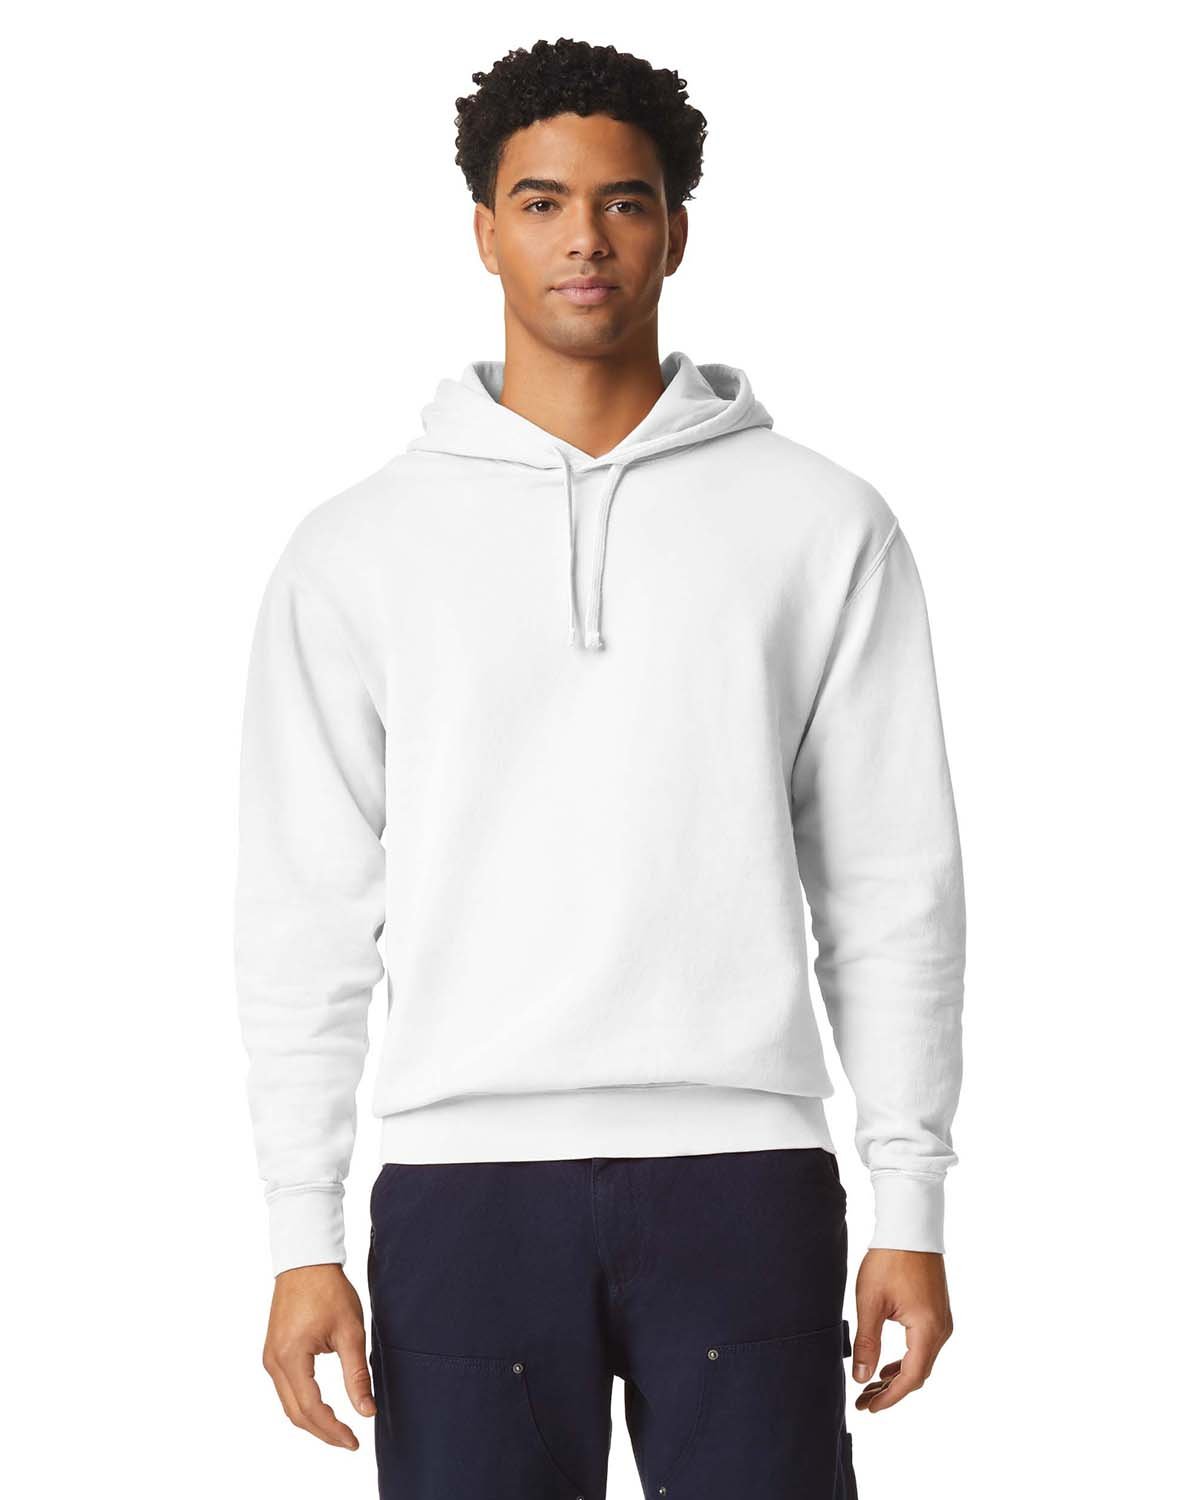 Unisex Lighweight Cotton Hooded Sweatshirt-Comfort Colors